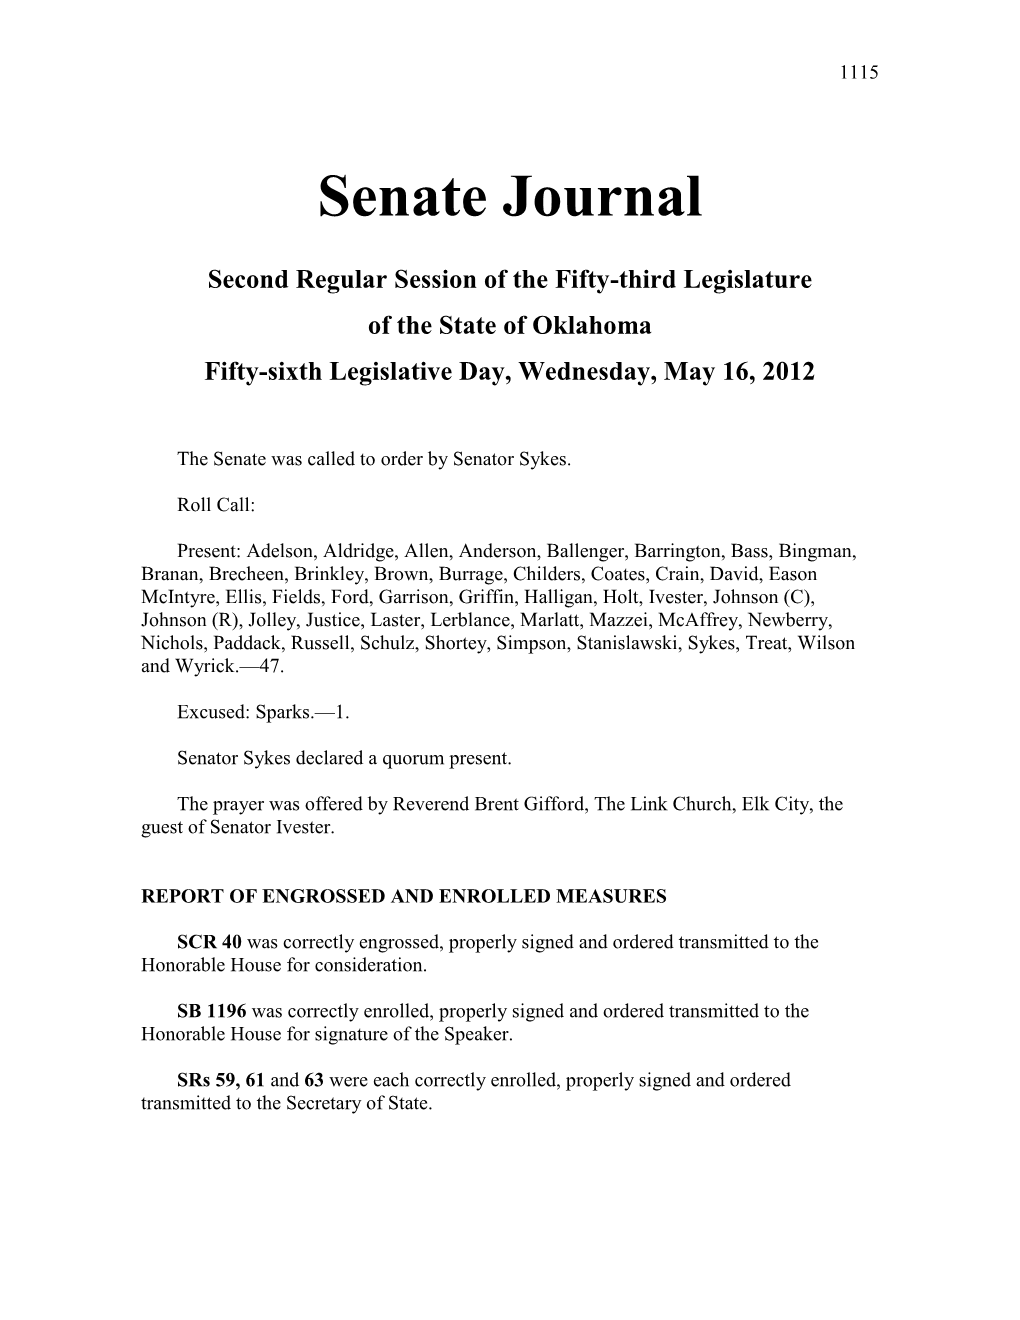 Senate Journal May 16, 2012